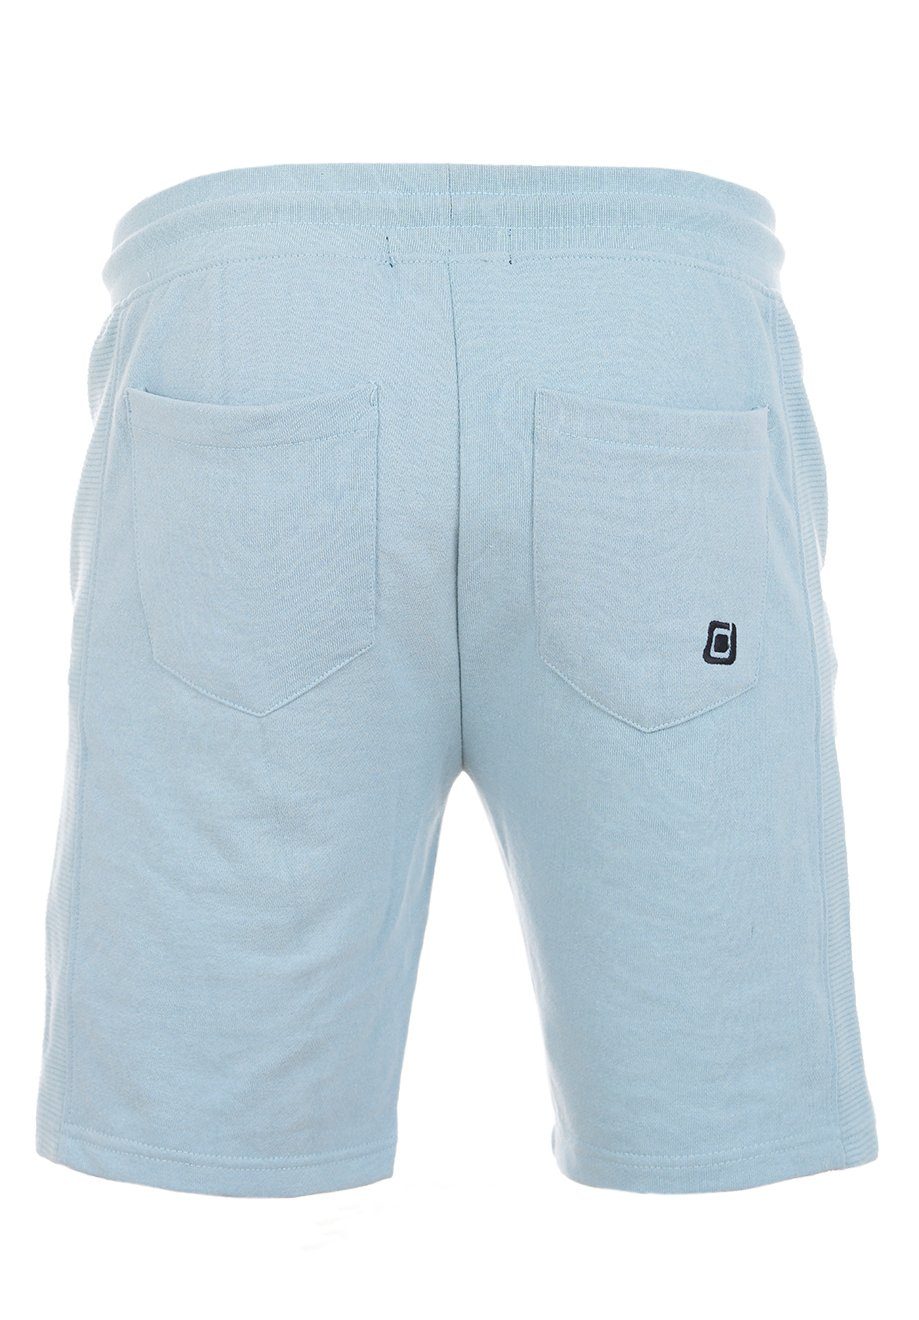 riverso Sweatshorts Herren Sportshorts Vintage Bermudashort Regular Jeans mit Kordelzug RIVBlake Blue Fit